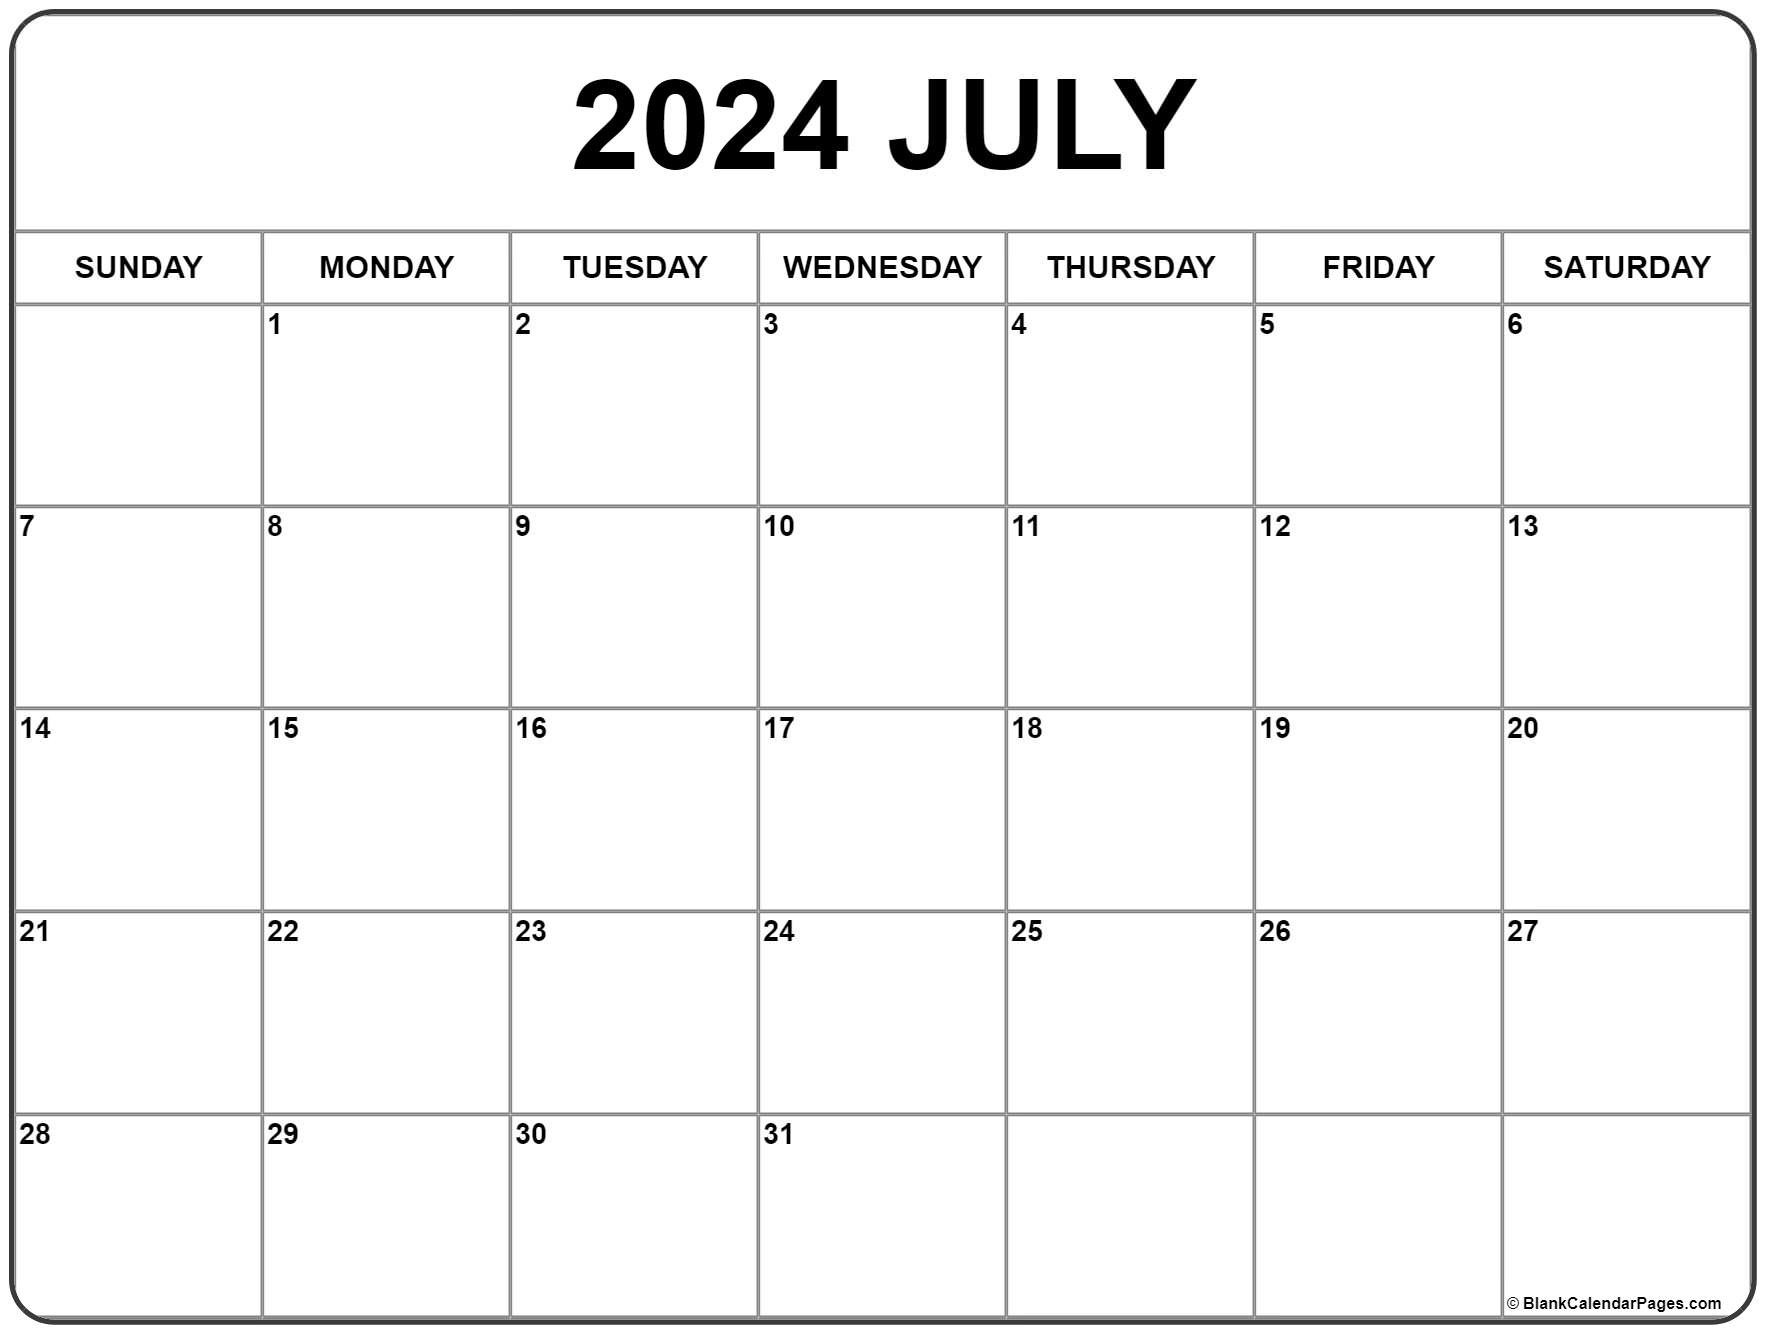 July 2024 Calendar | Free Printable Calendar intended for July Free Printable Calendar 2024